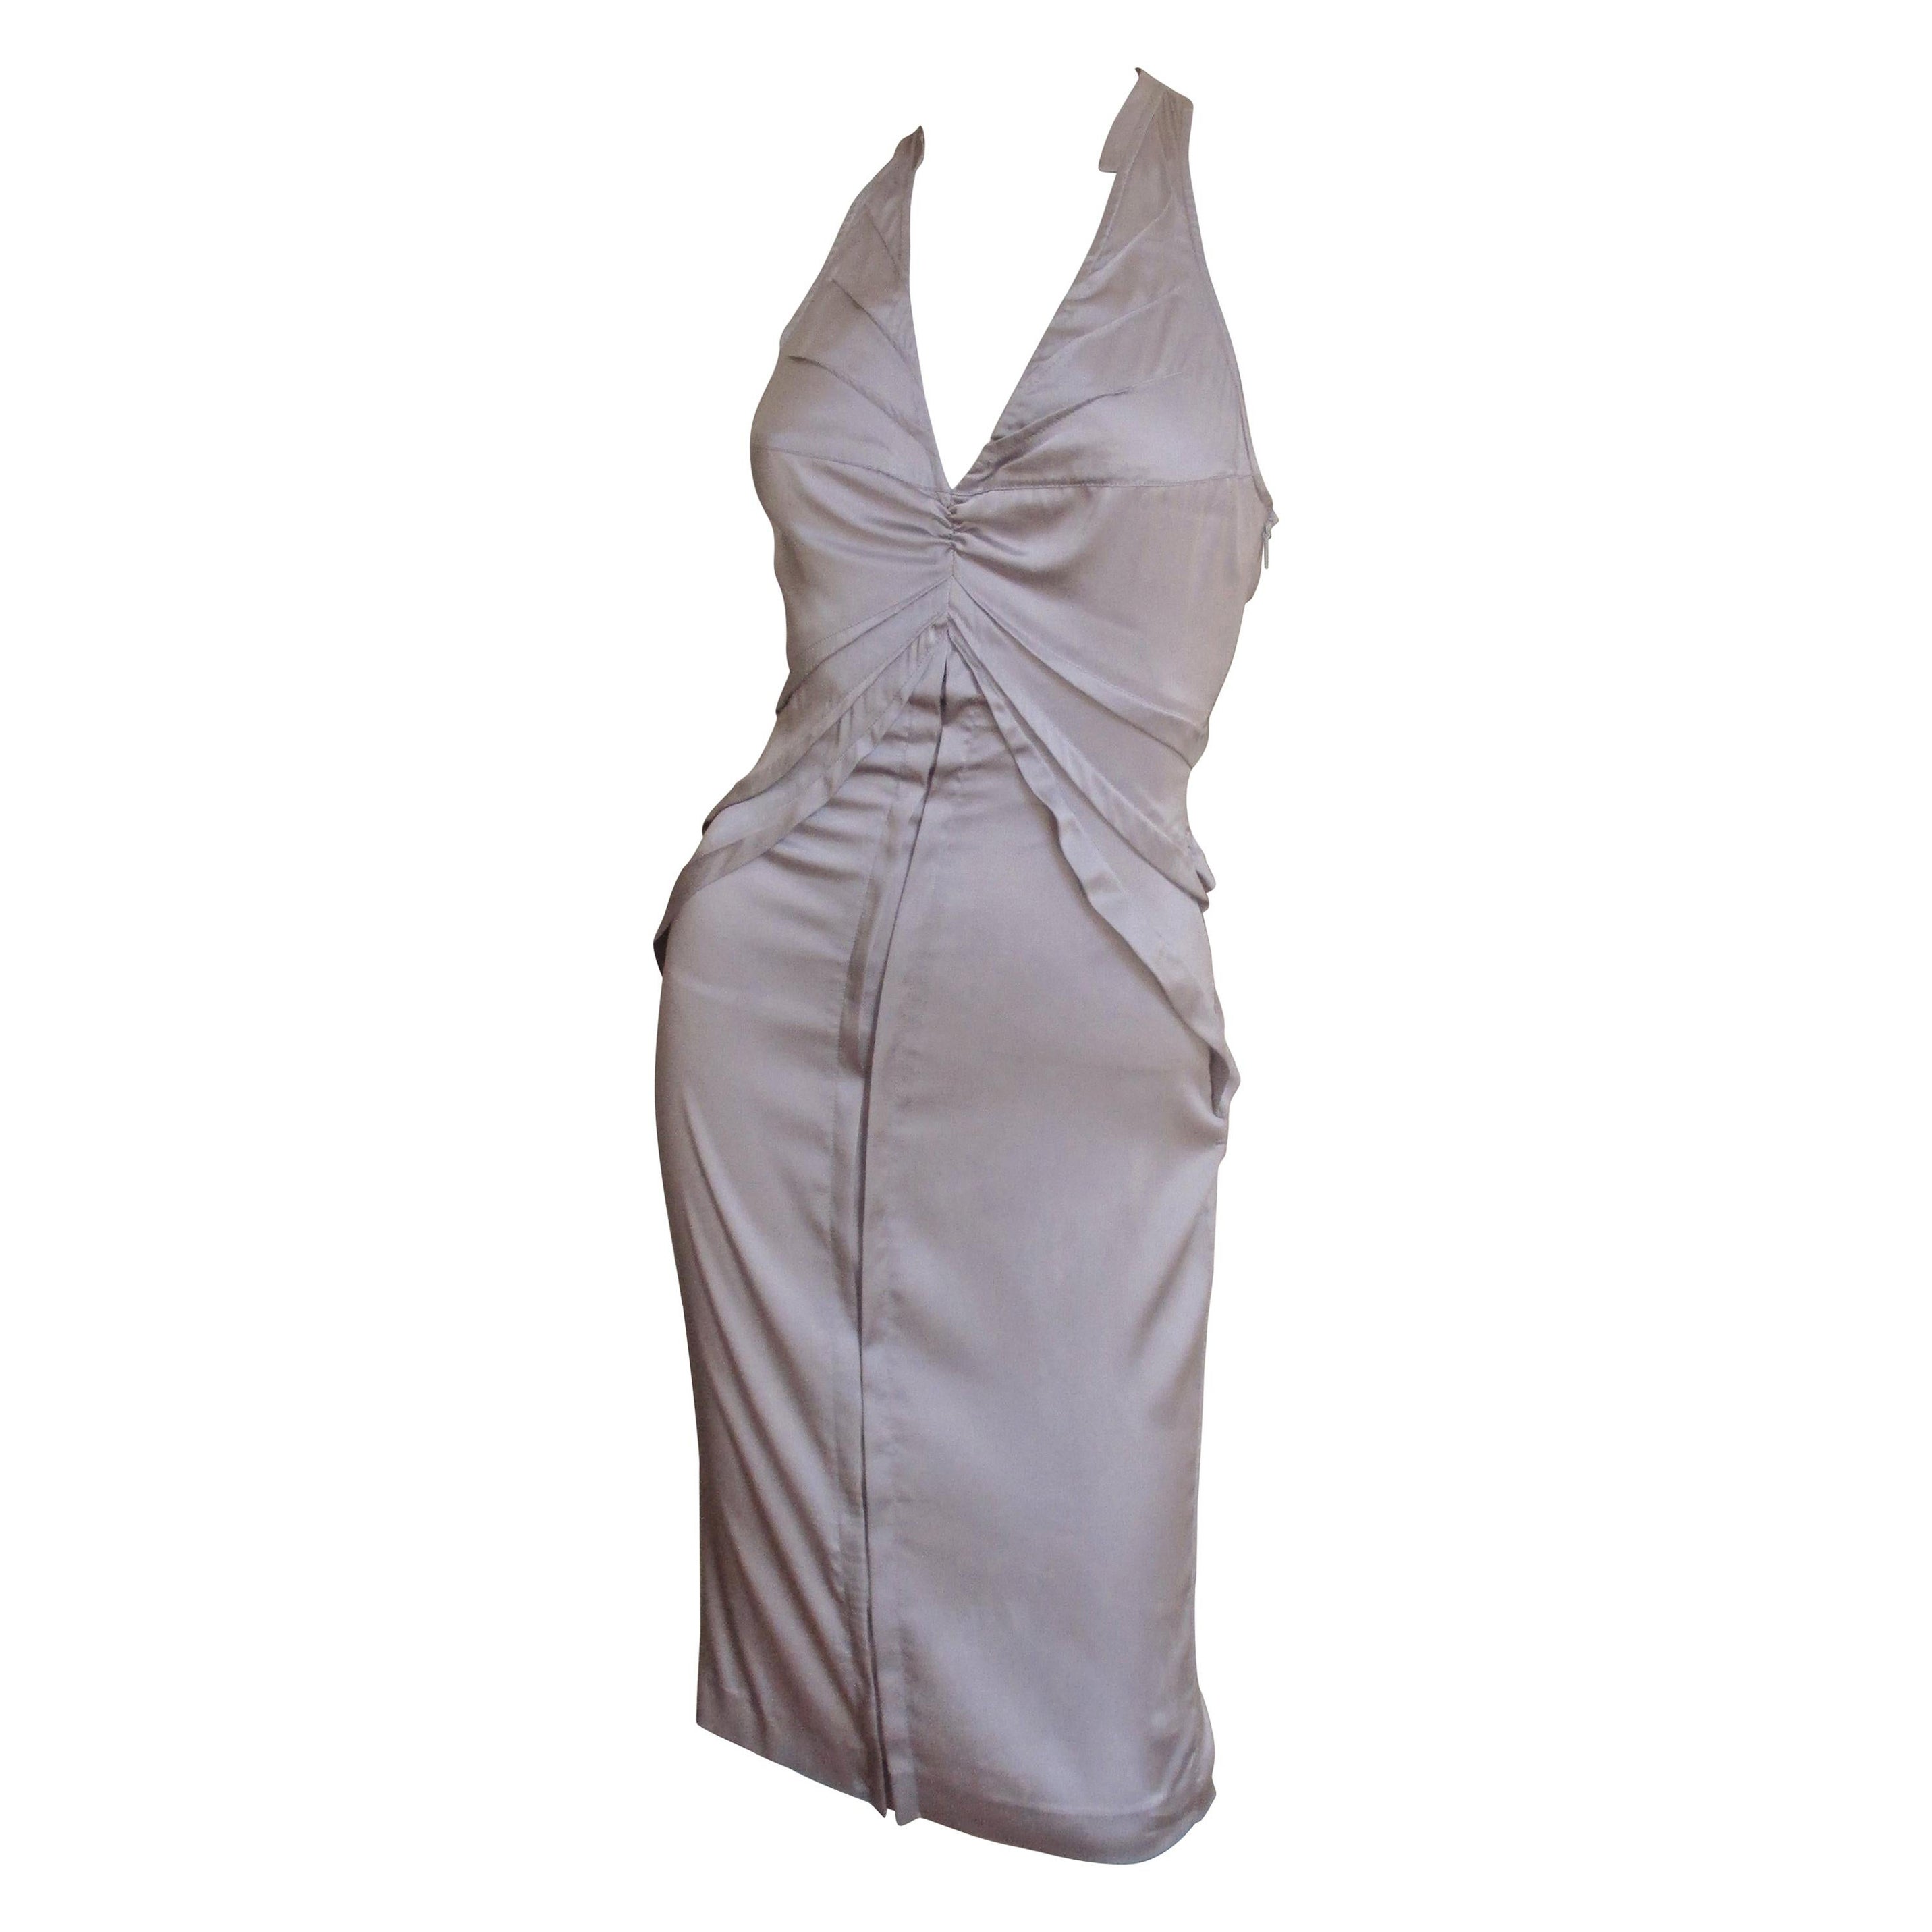  Tom Ford for Gucci Lavender Silk Halter Dress S/S 2003